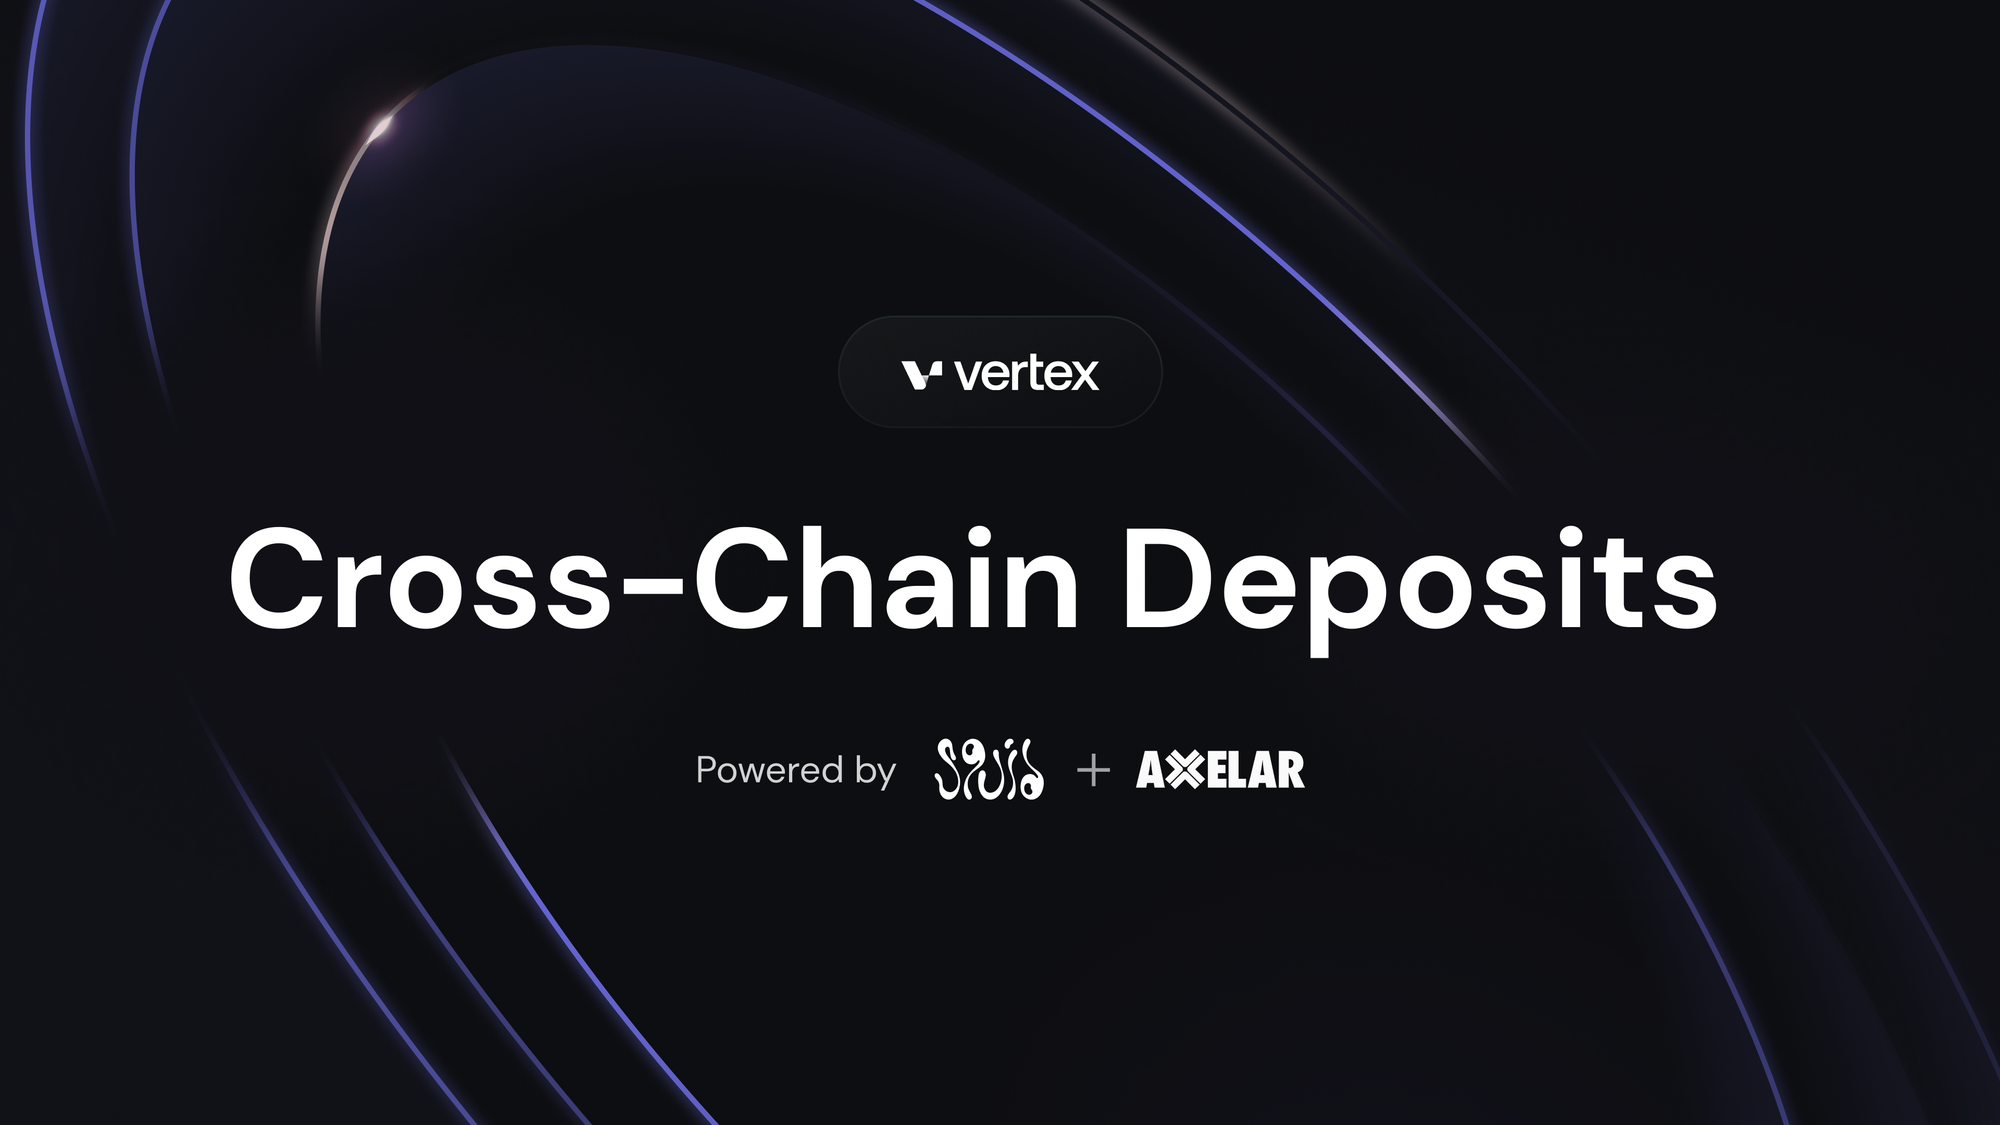 Introducing Cross-Chain Deposits